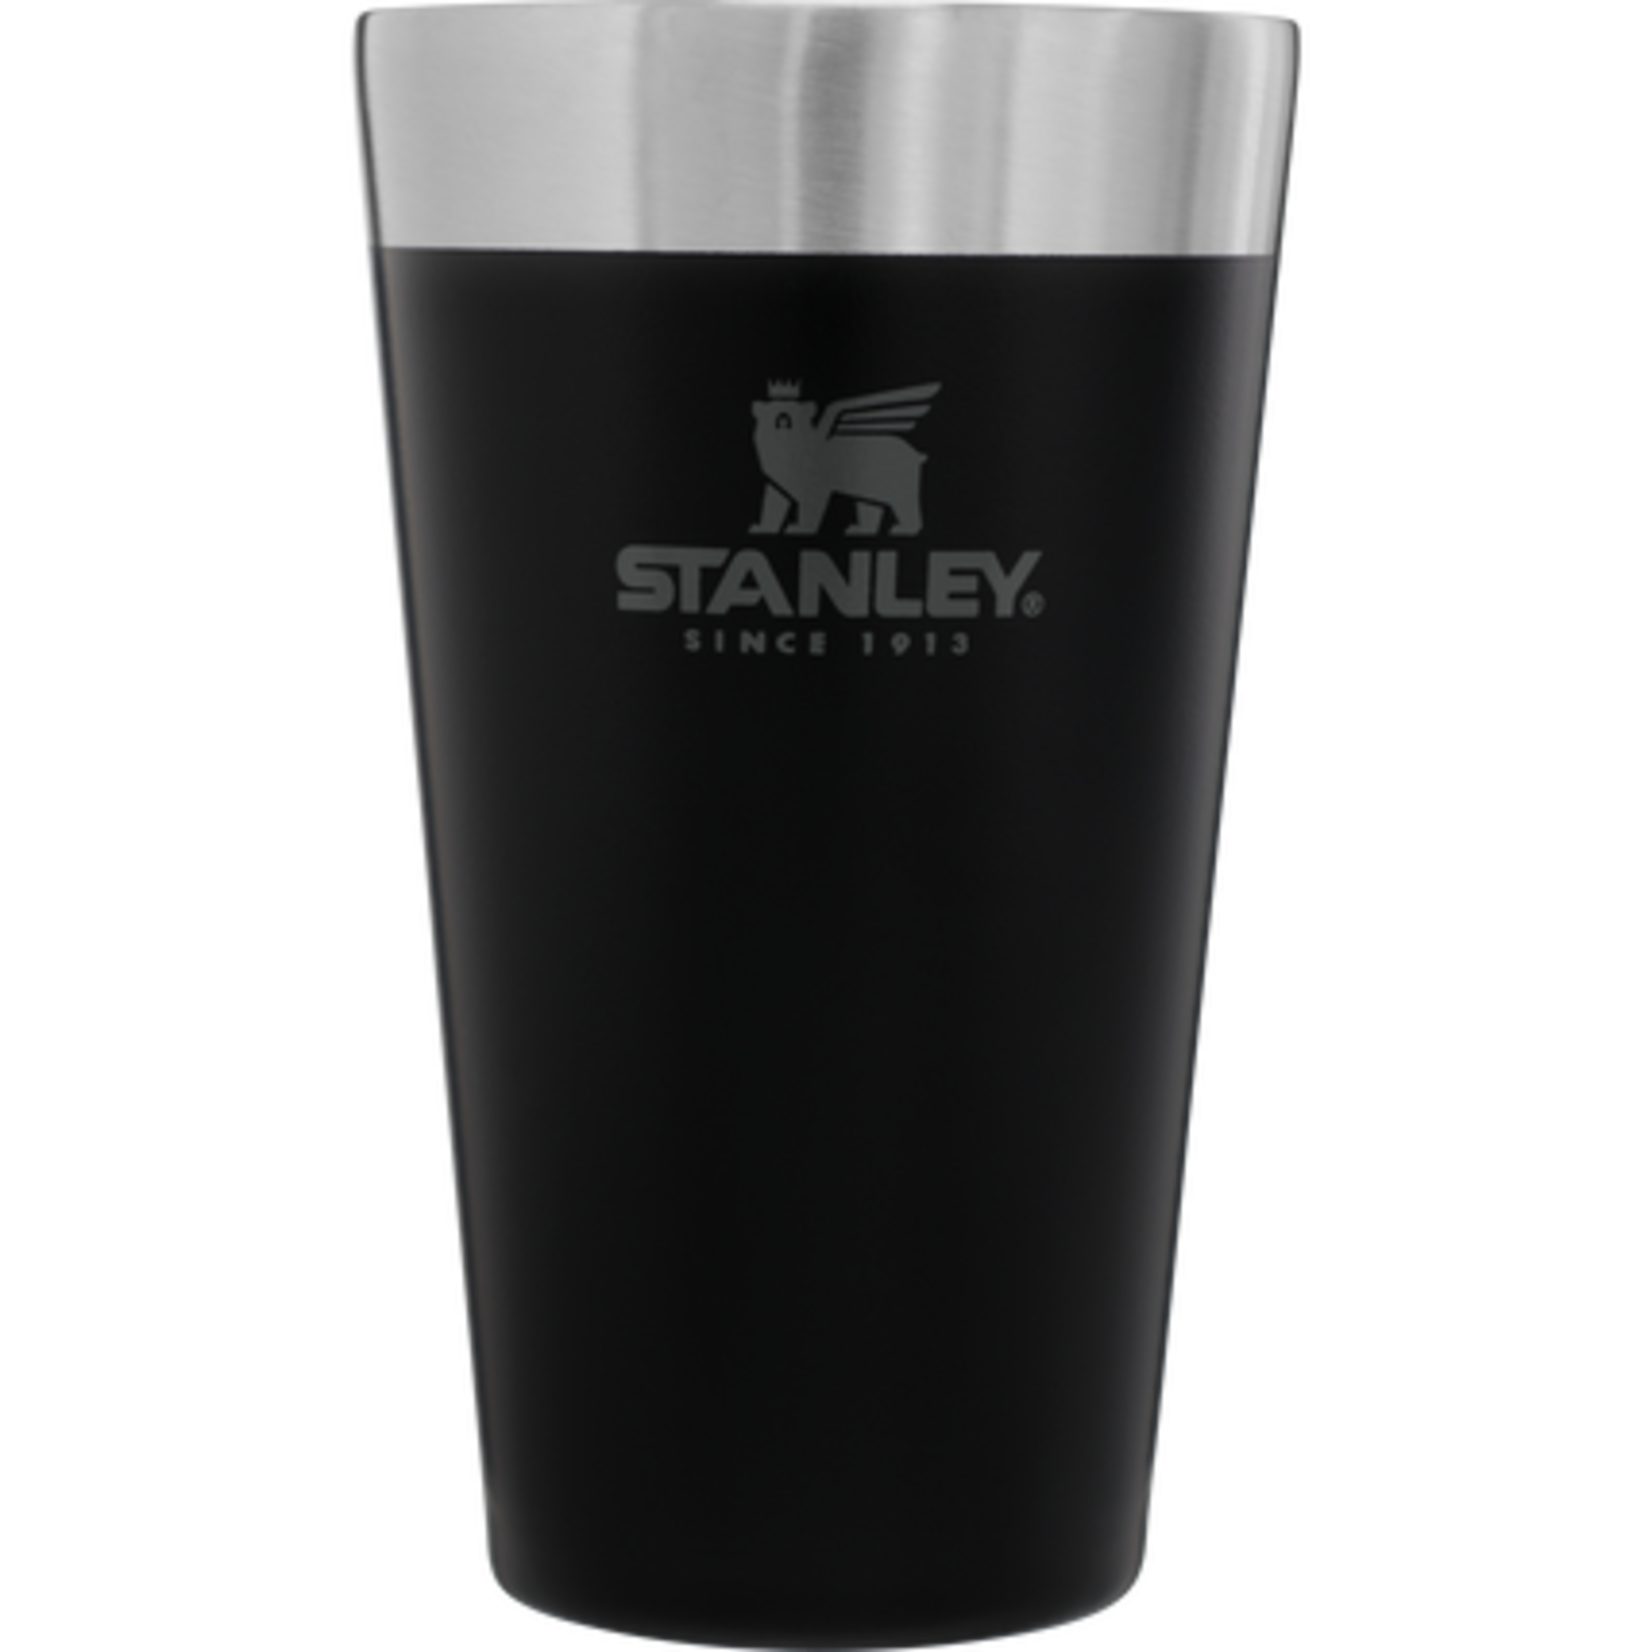 Stanley Adventure Stacking 16oz Beer Pint - Matte Black